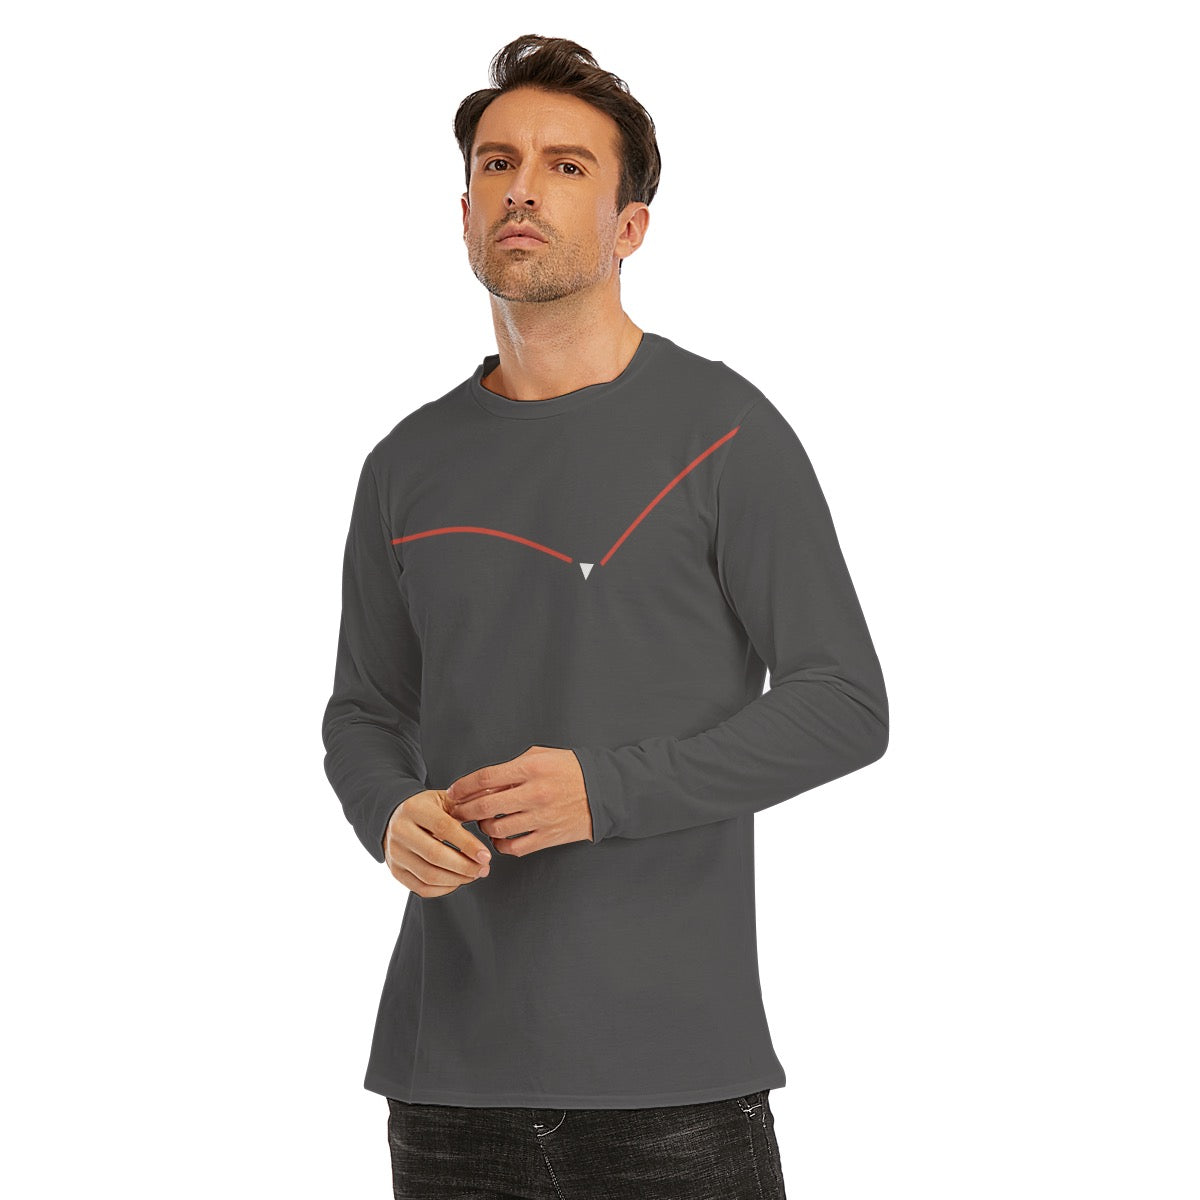 Vluxe Go Long Sleeve T-Shirt | Cotton in Steel Gray